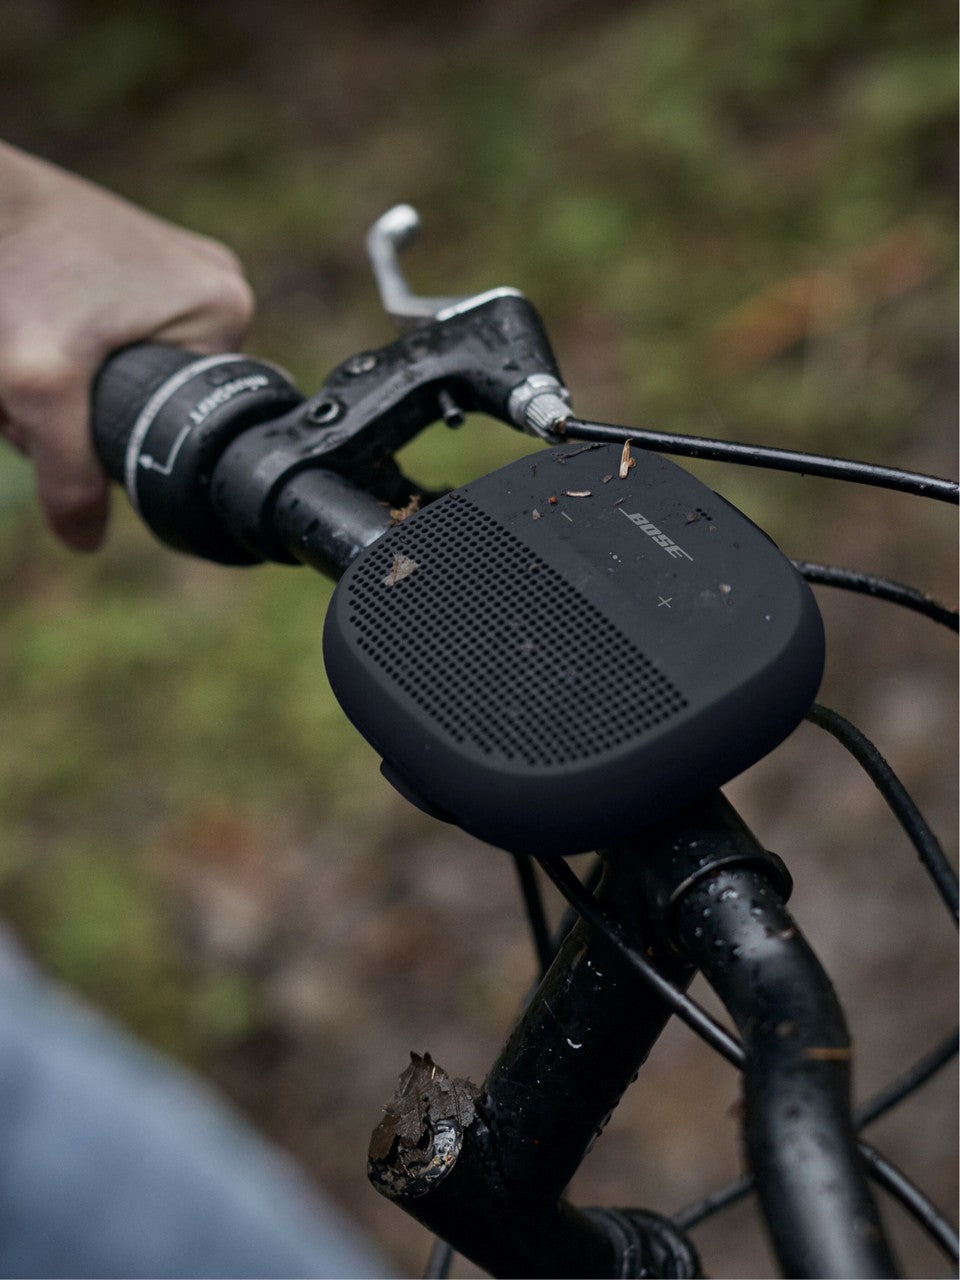 Bose SoundLink Micro - Altavoz Bluetooth Resistente al Agua